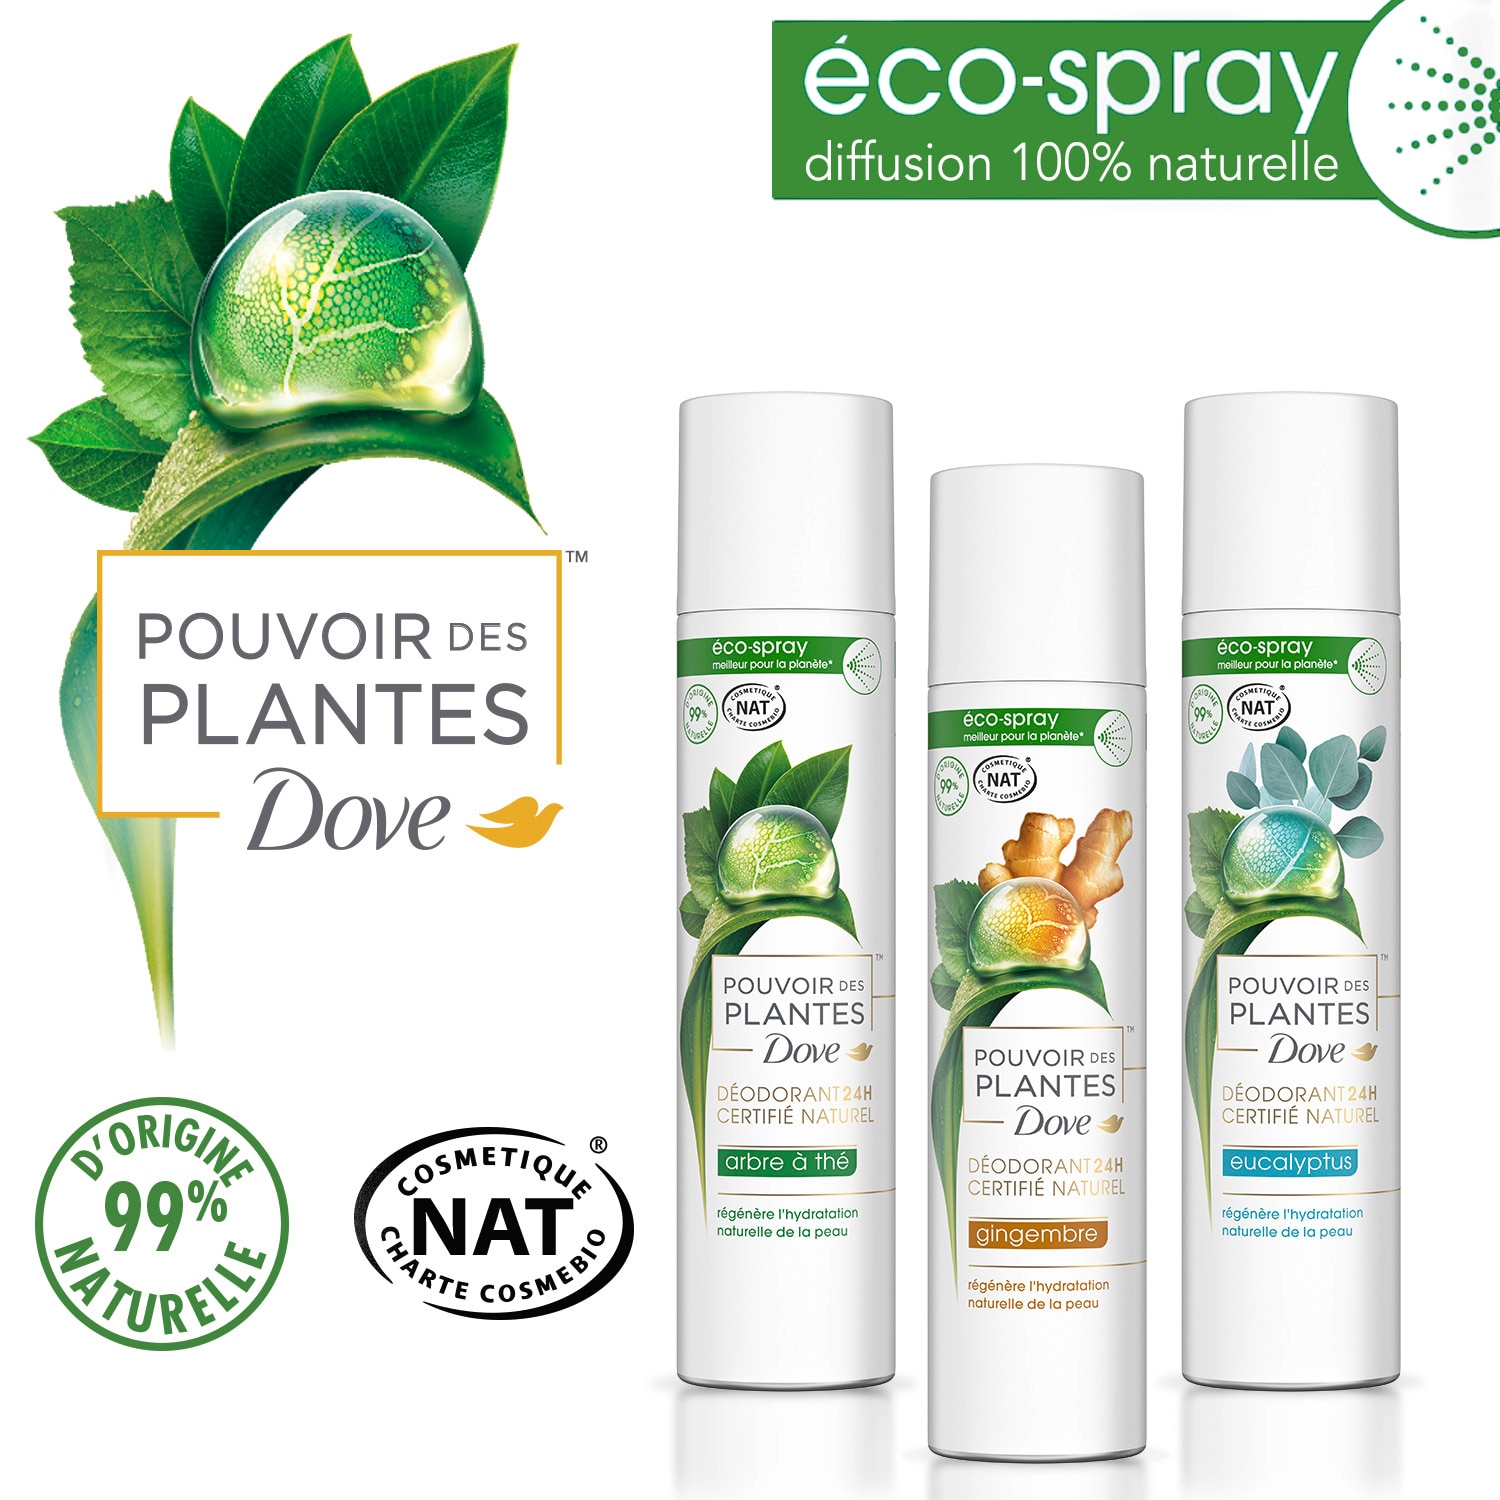 Eco spray - Dove pouvoir des plantes Text